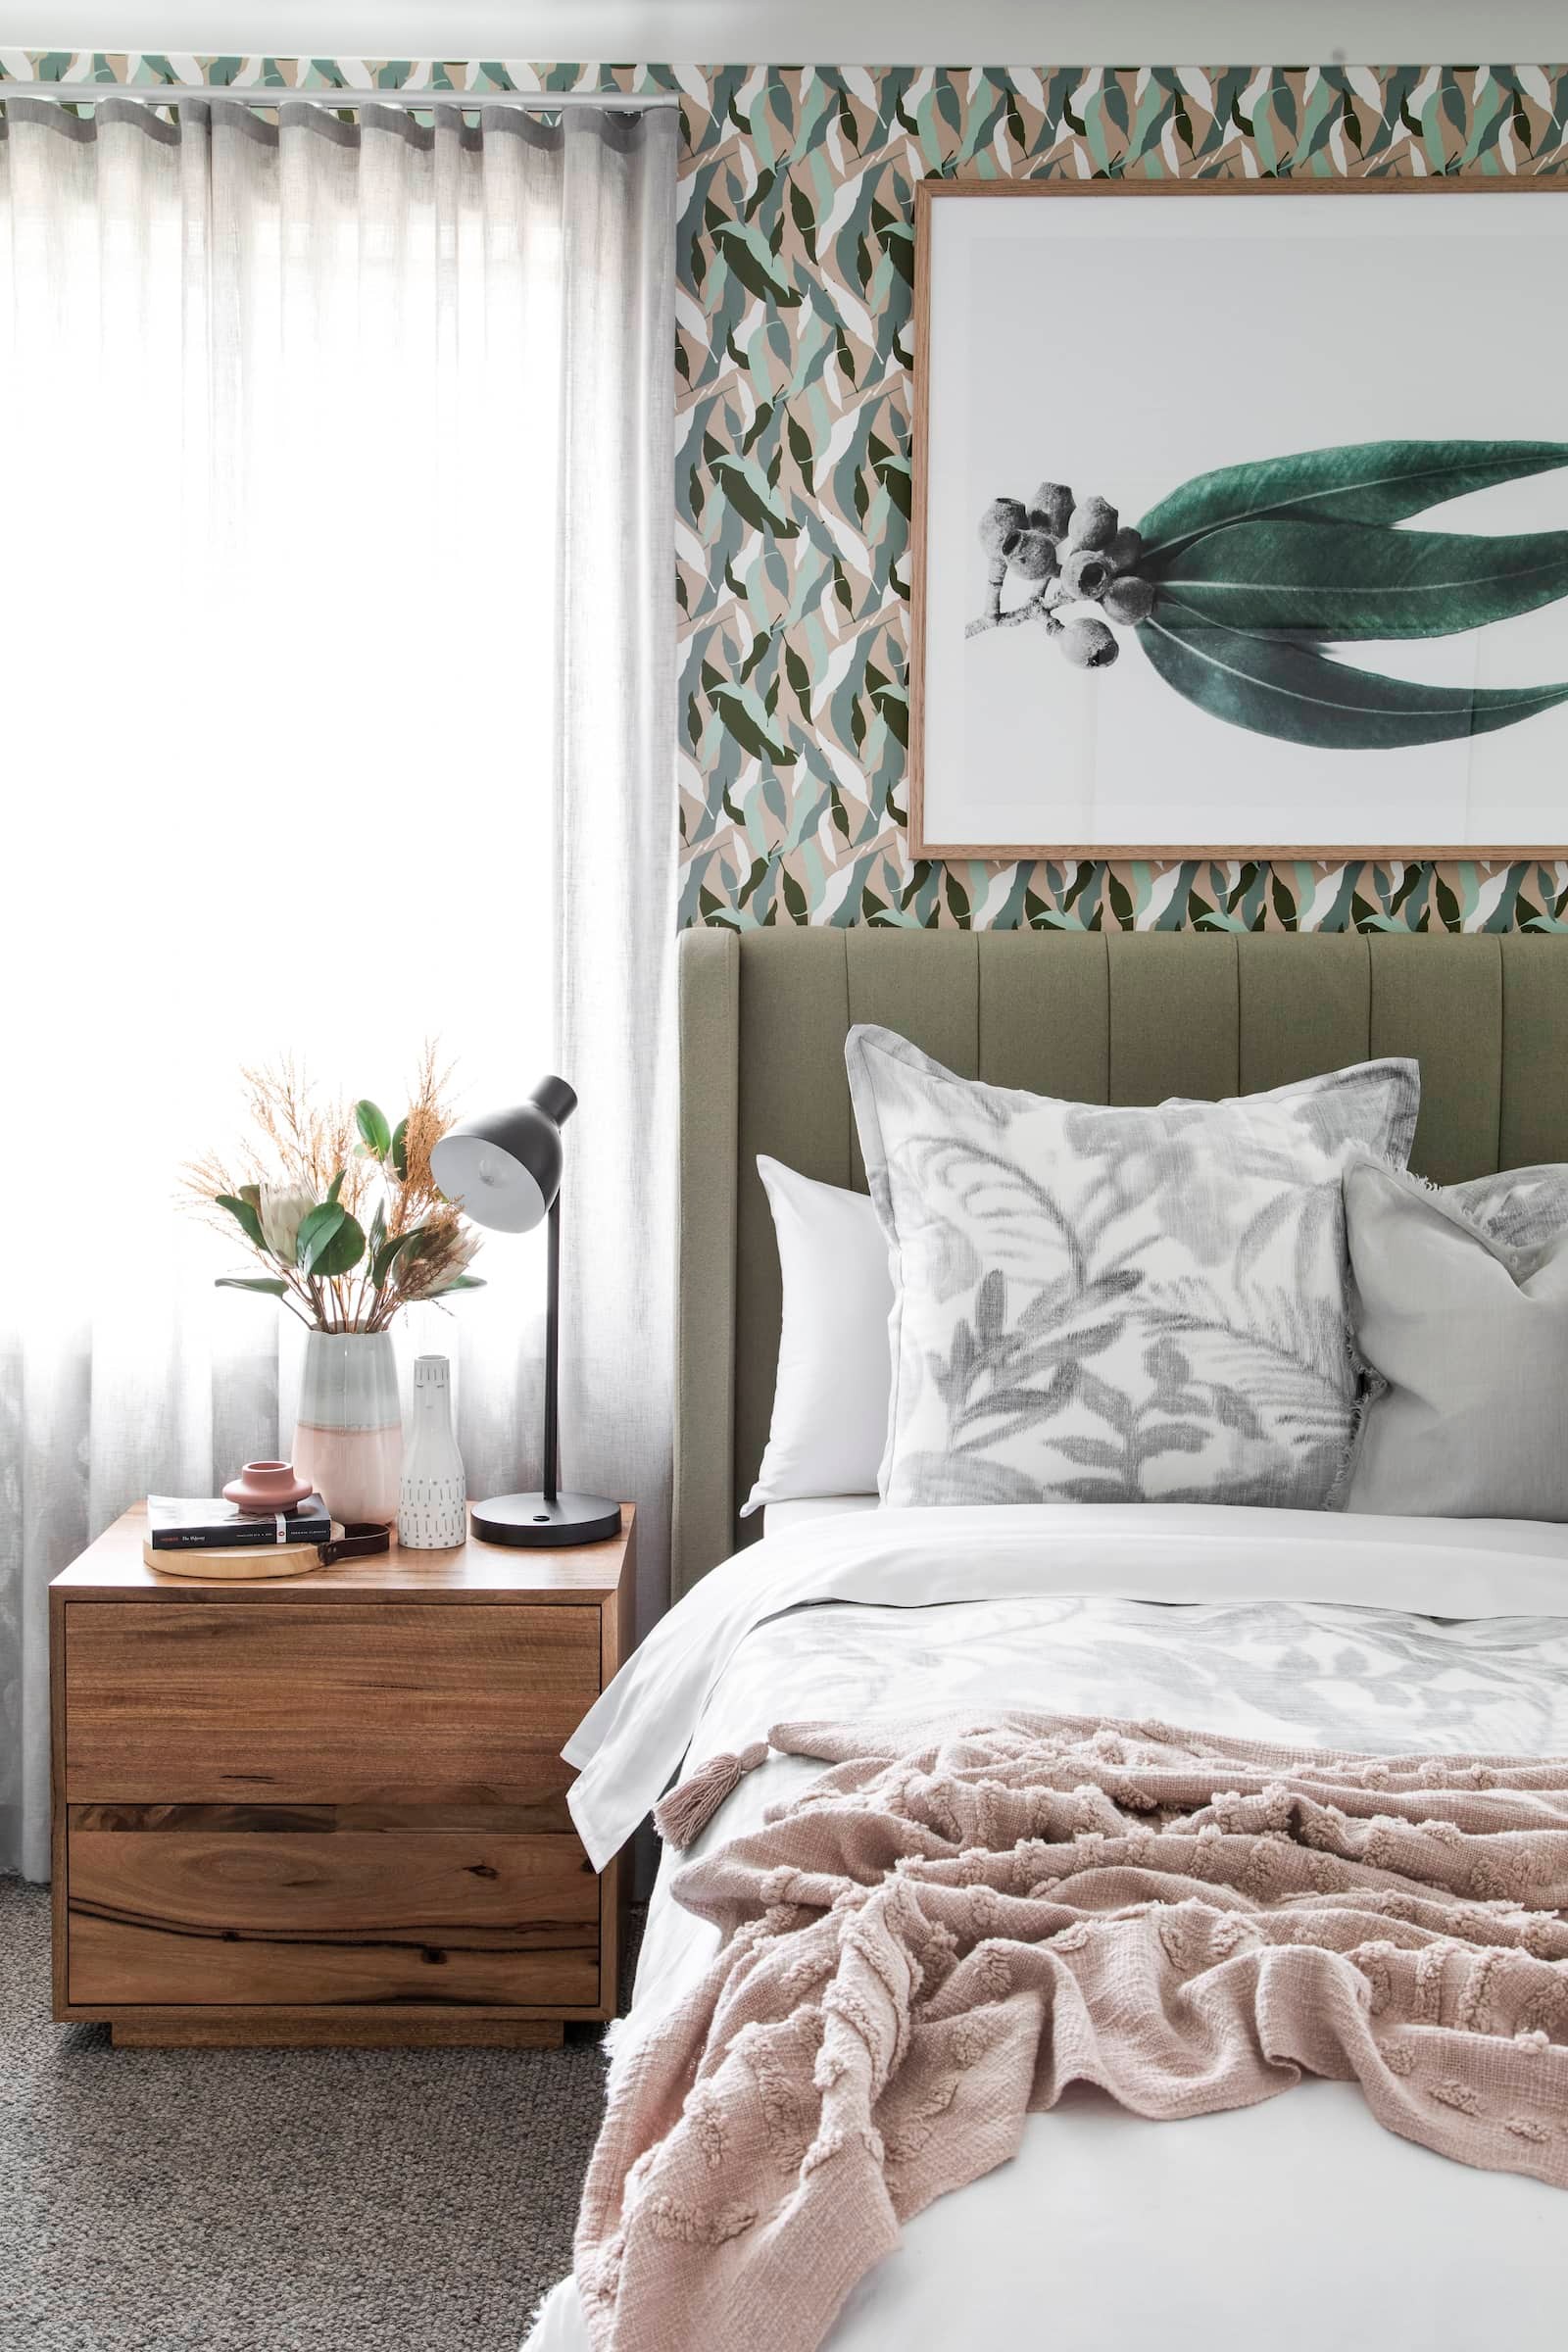 australiana bedroom design with eucalyptus wall art and wallpaper